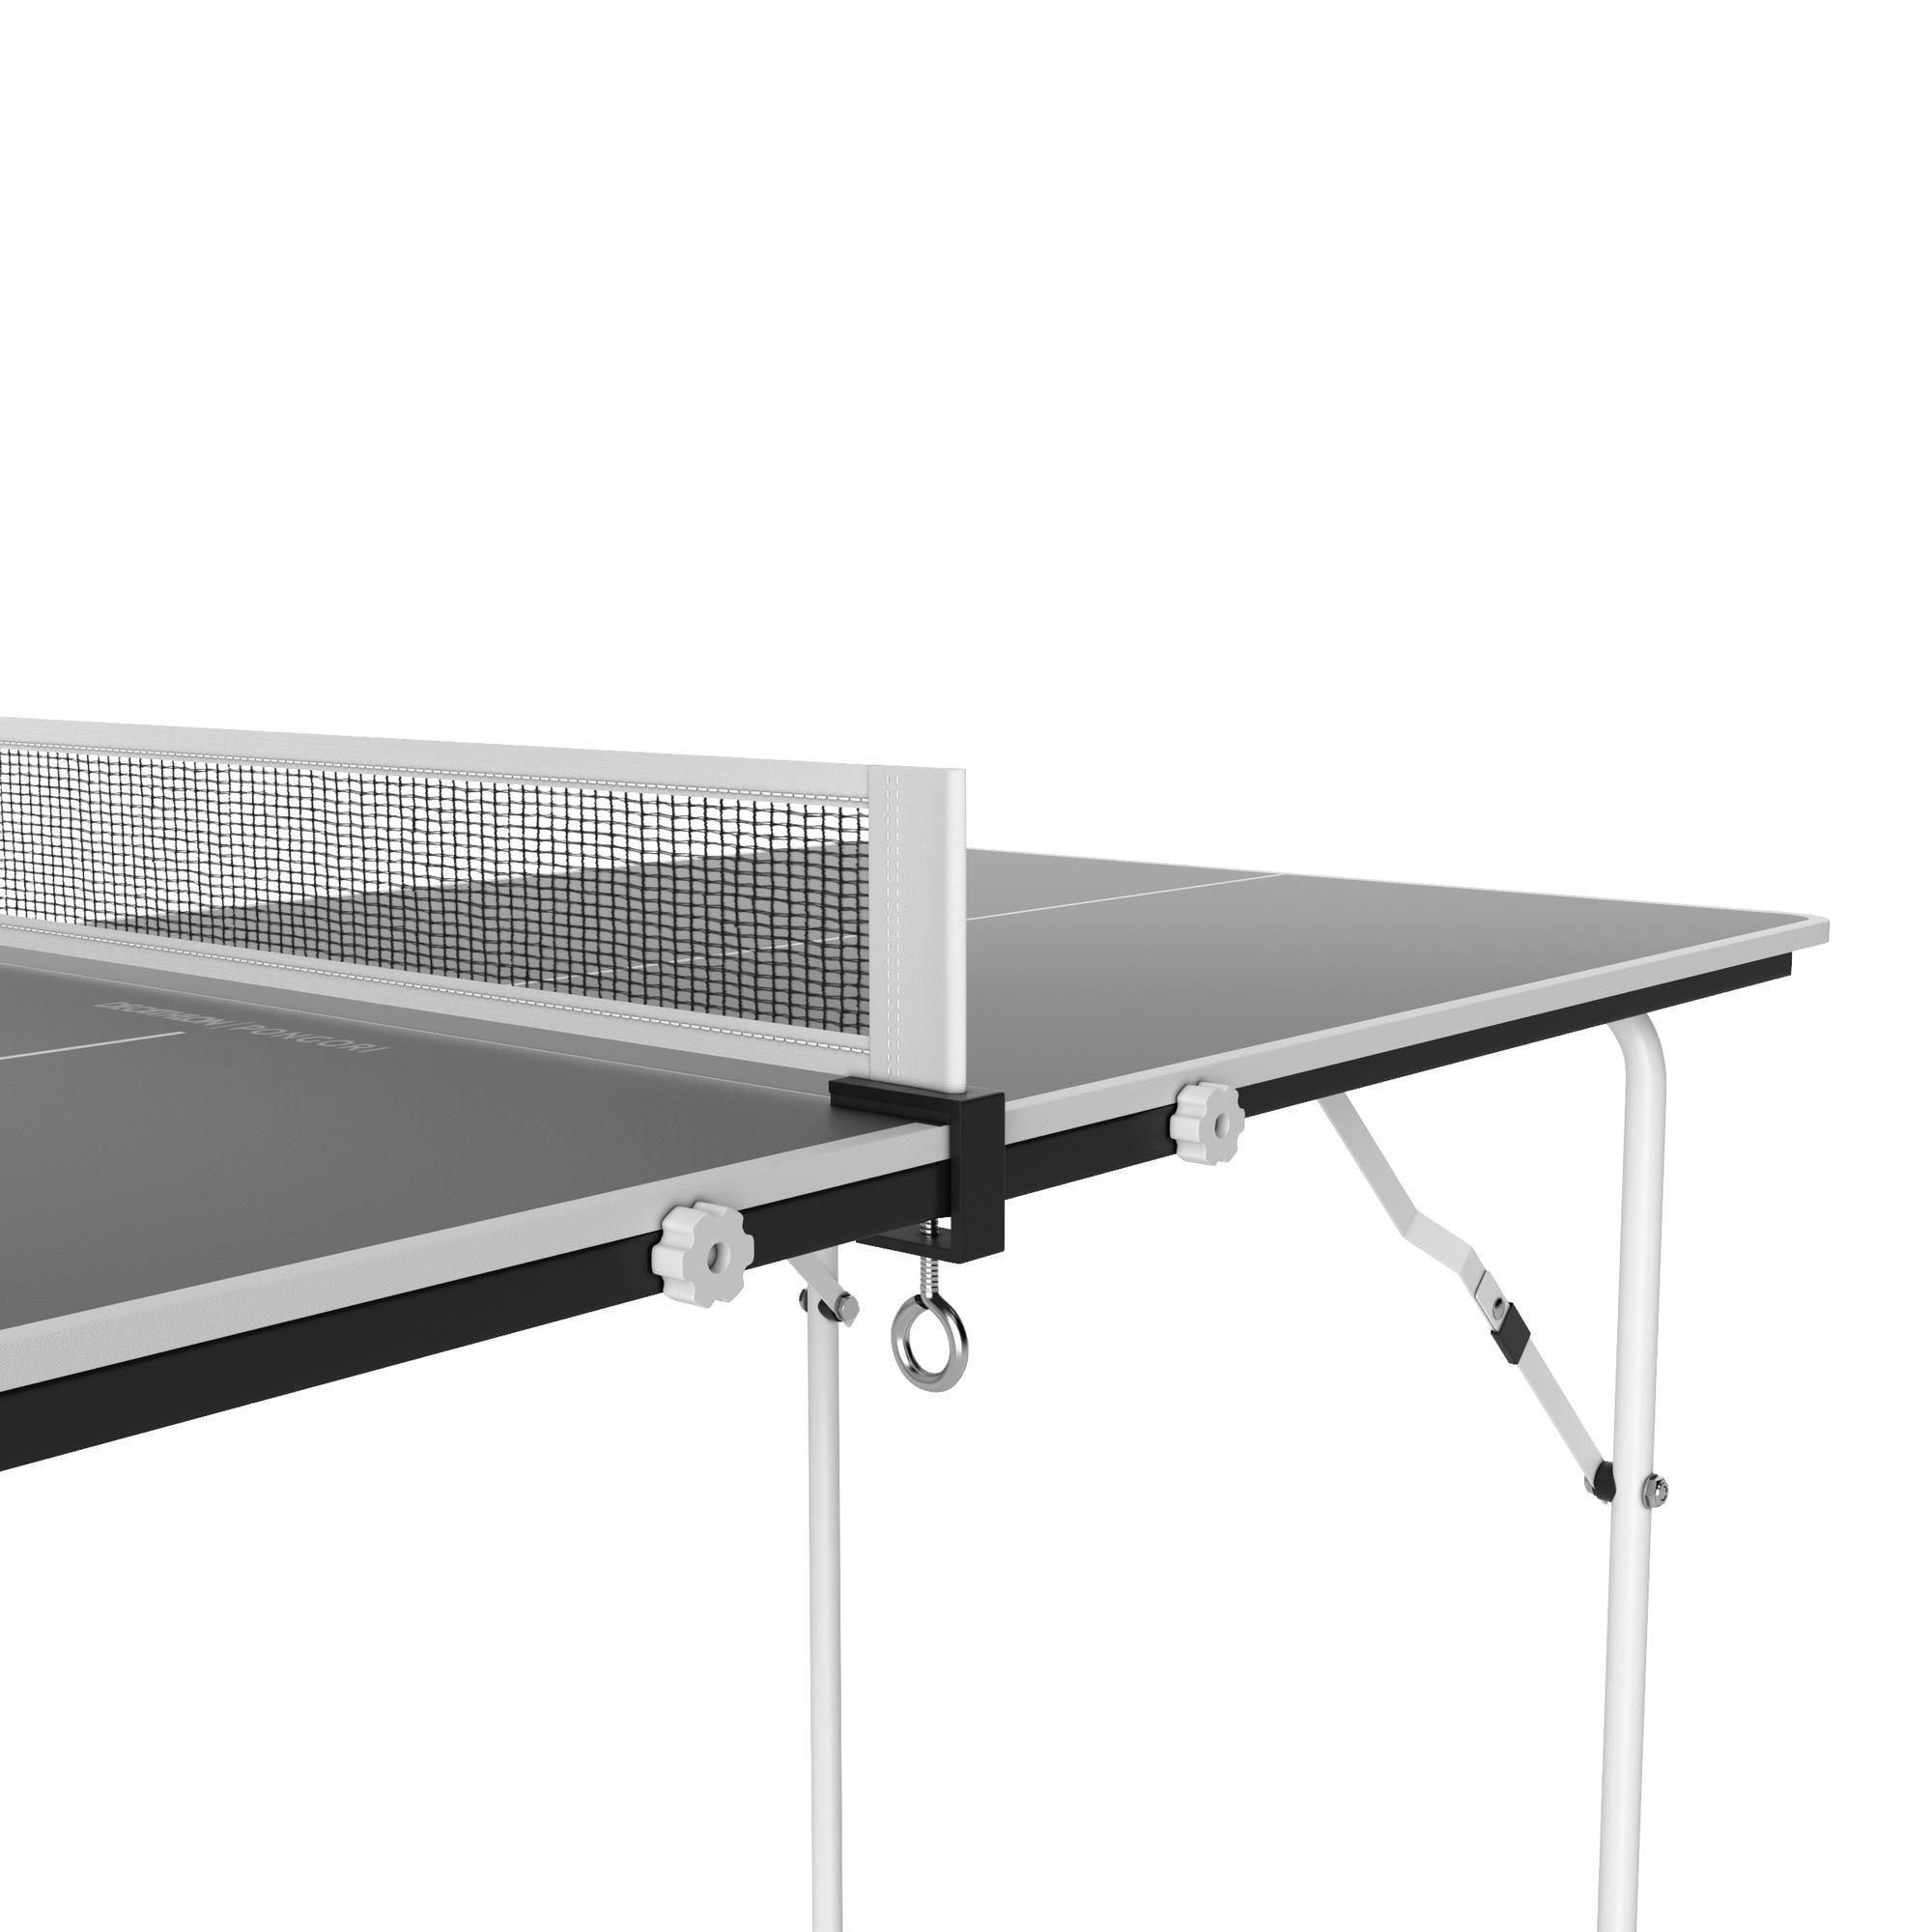 decathlon ping pong table